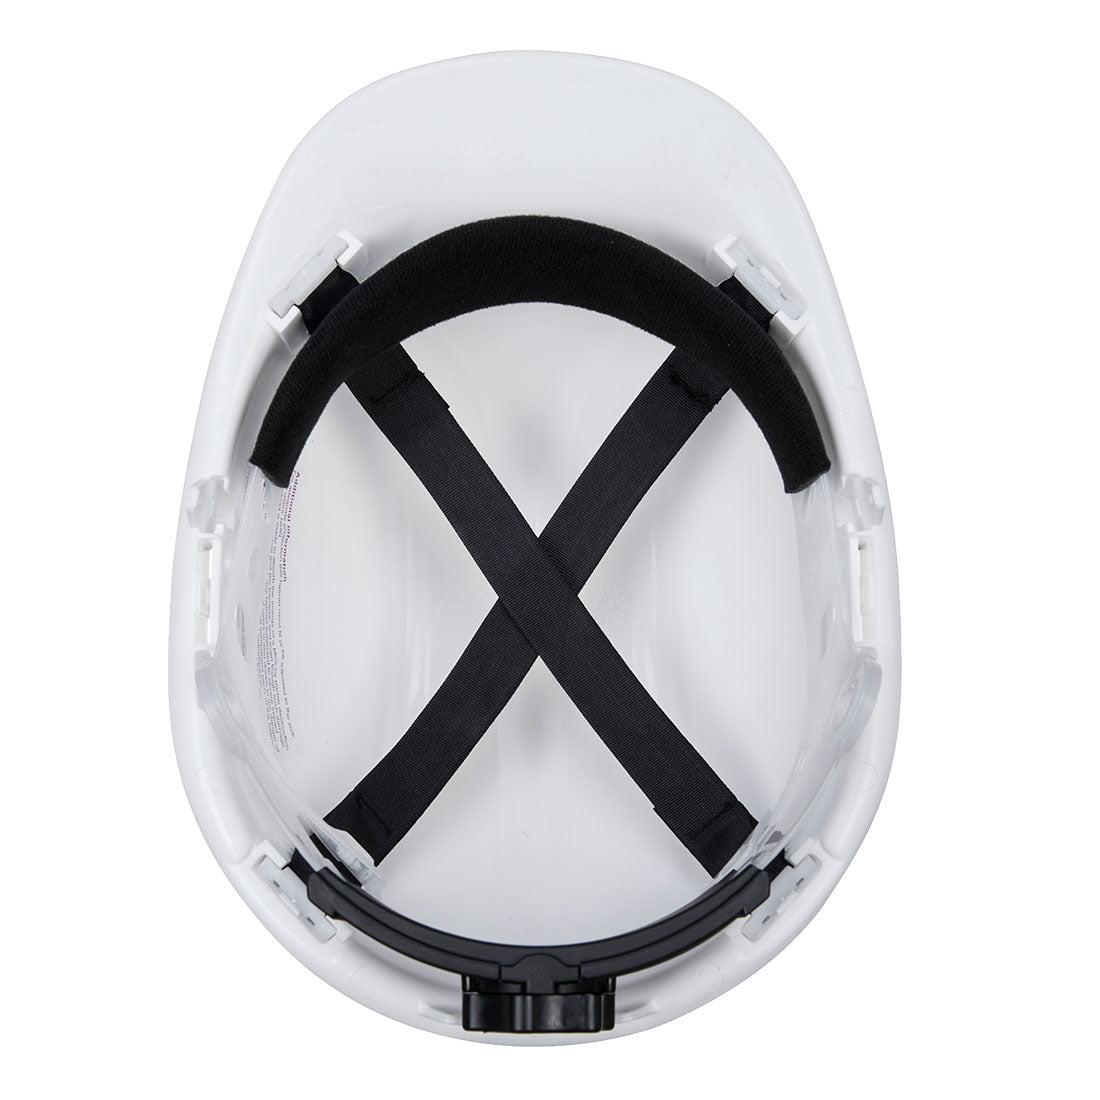 Expertbase Wheel Safety Helmet White